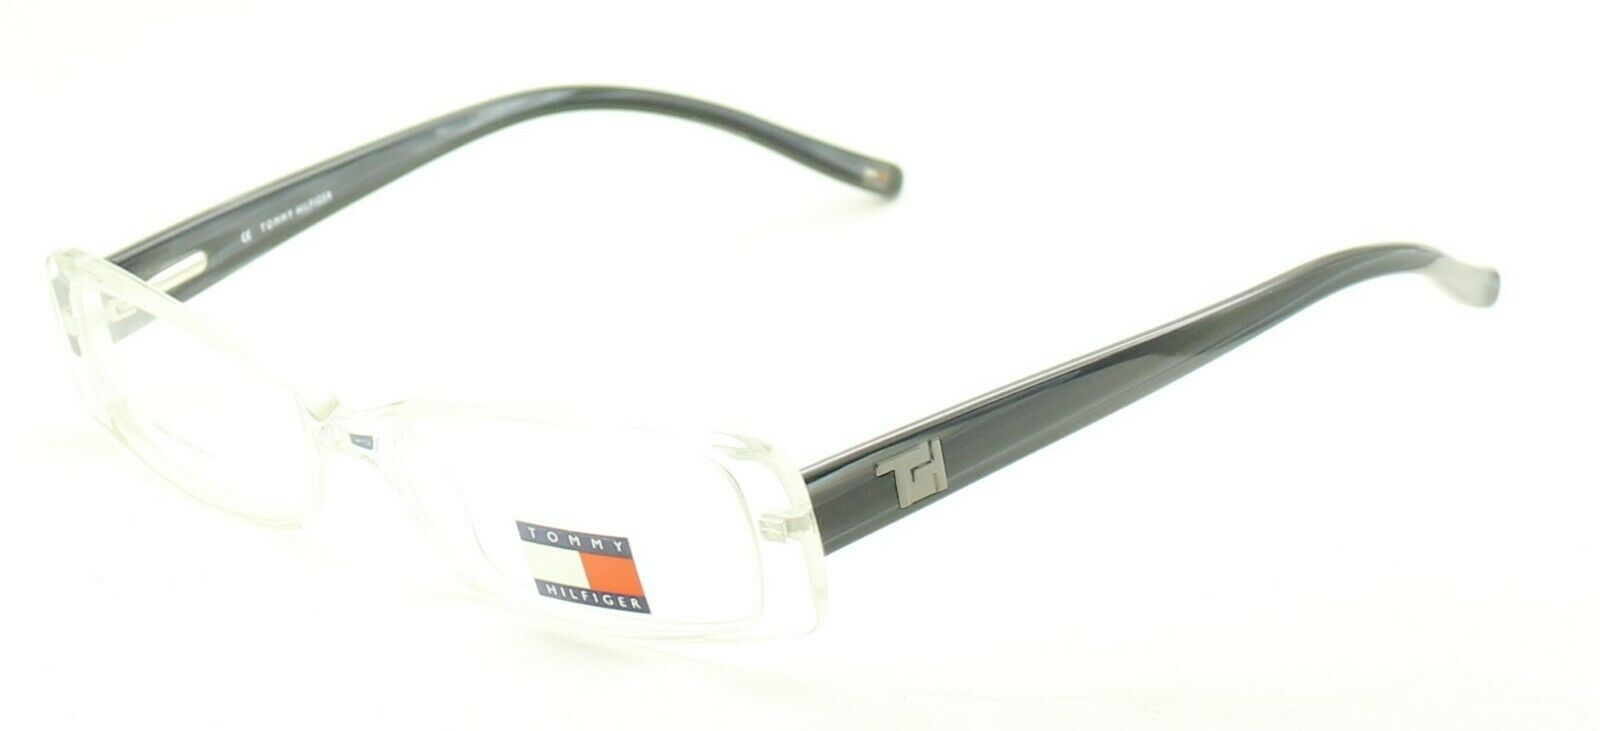 TOMMY HILFIGER TH 3079 CRY 50mm Eyewear FRAMES Glasses RX Optical Eyeglasses New